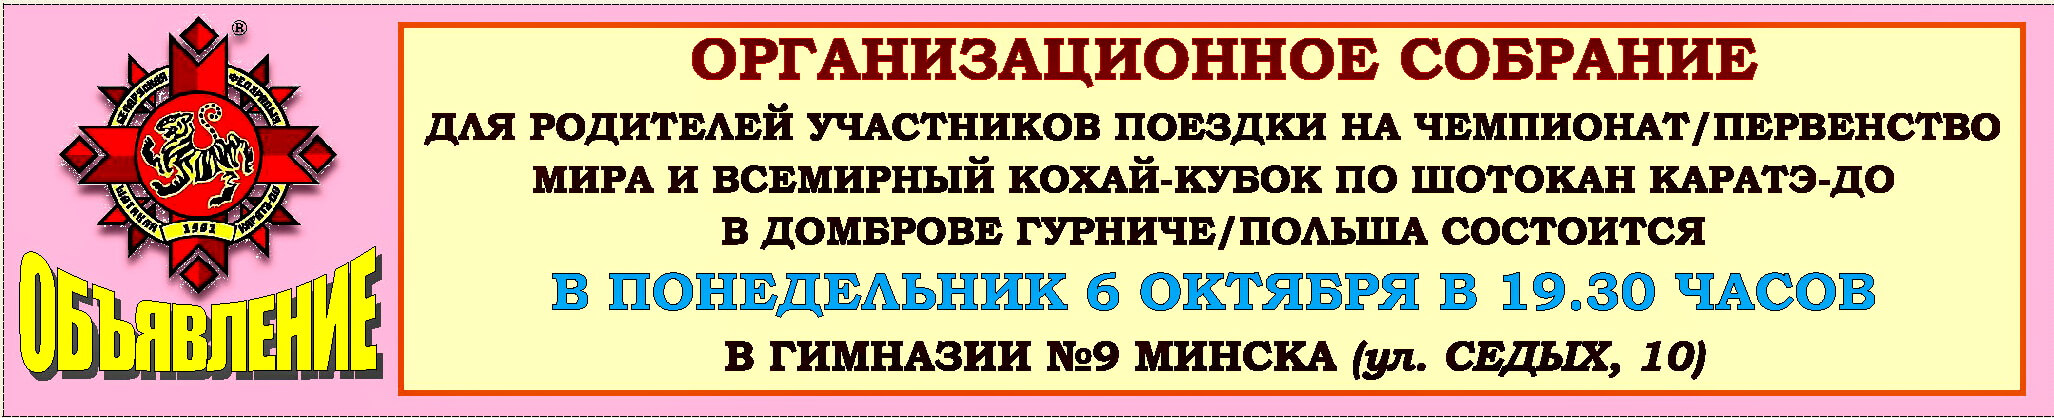 АК Собрание 2014-10-06